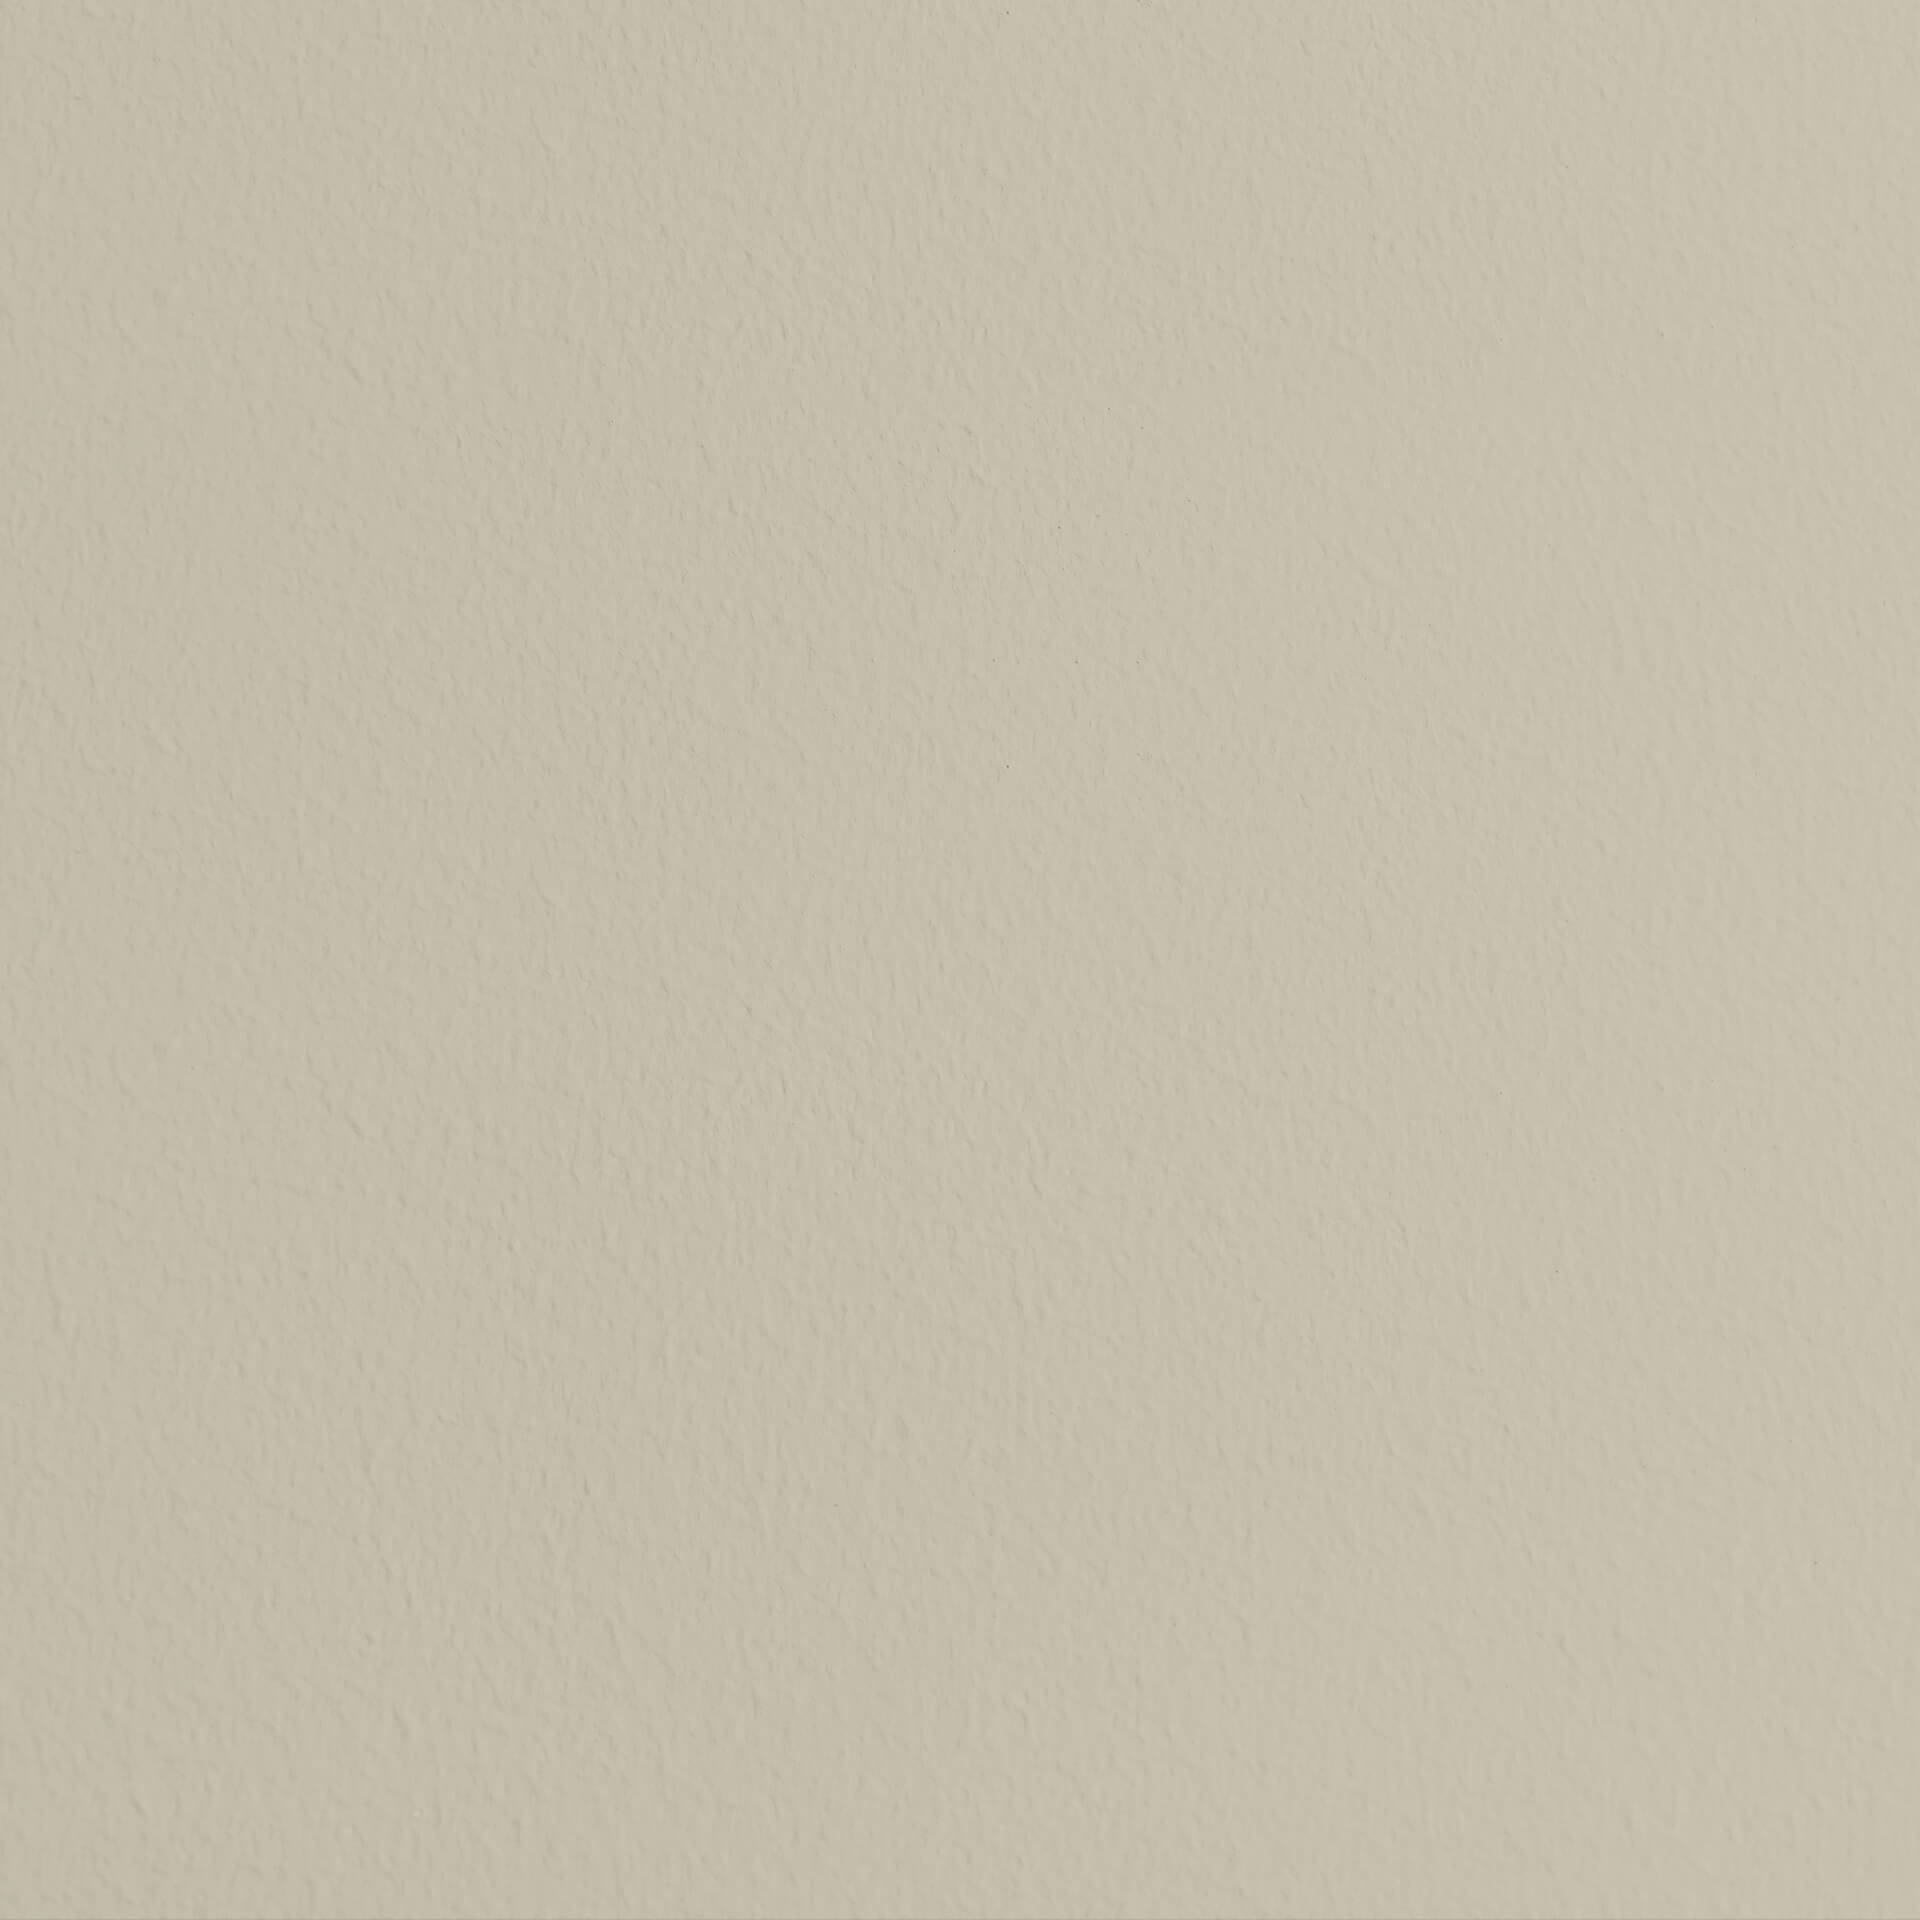 Mylands Flanders Grey No. 110 - Wood & Metal Eggshell / Lack Seidenmatt, 2.5L